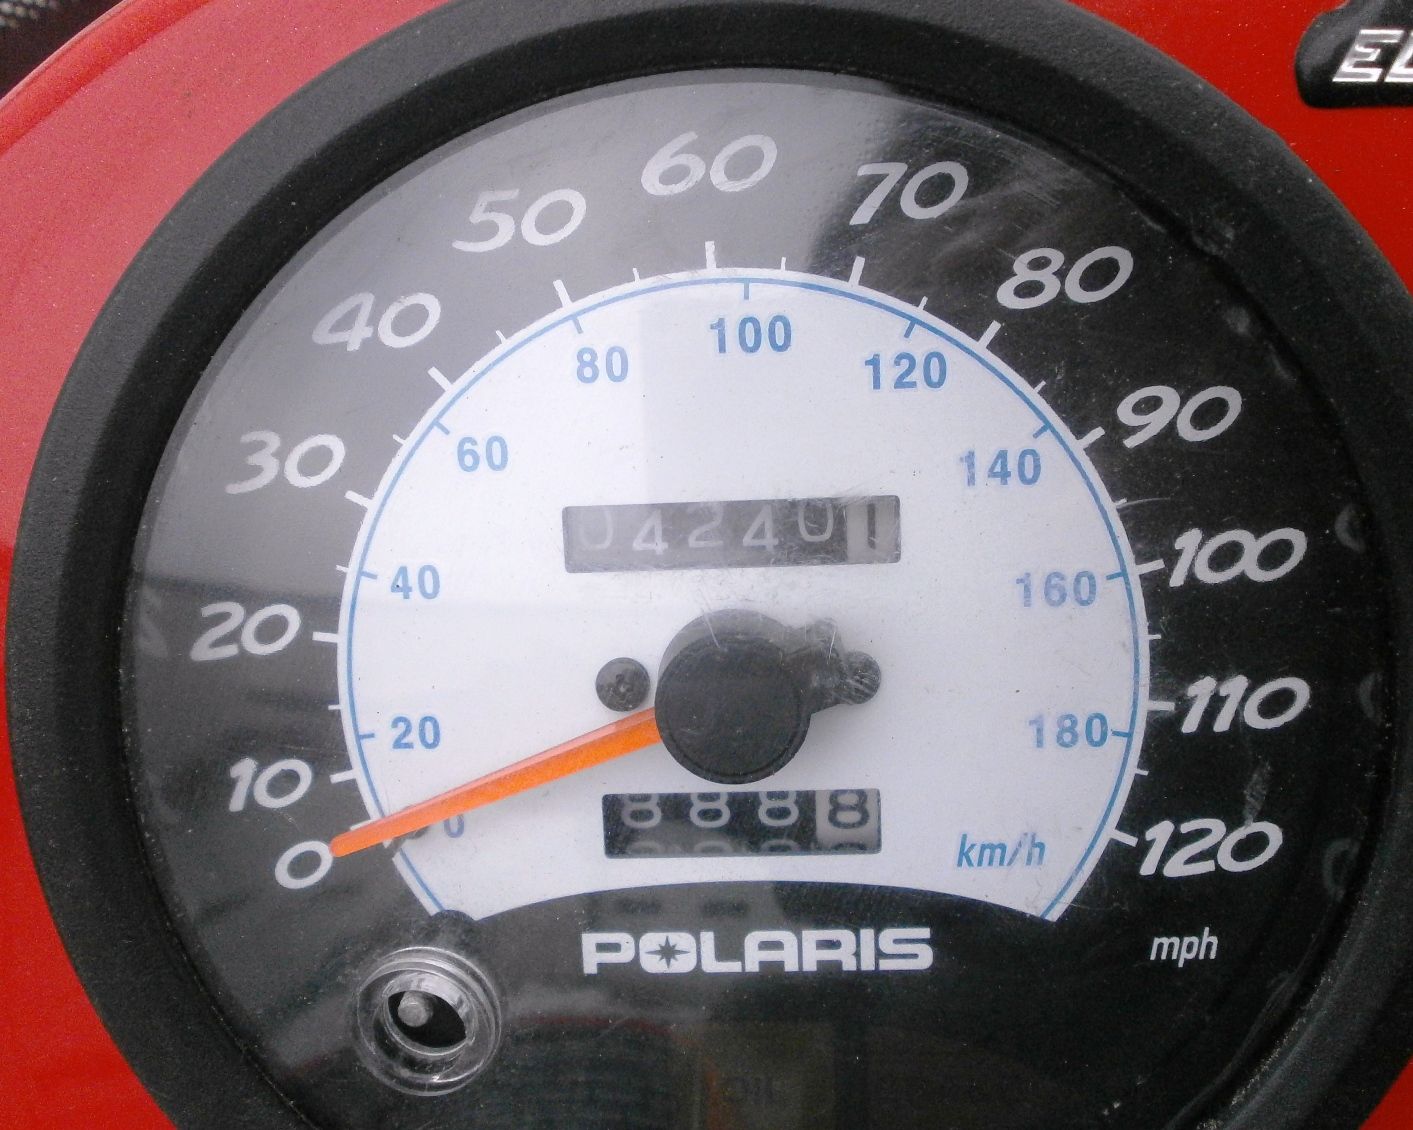 2003 Polaris Supersport 550 Edge X in Barrington, New Hampshire - Photo 5